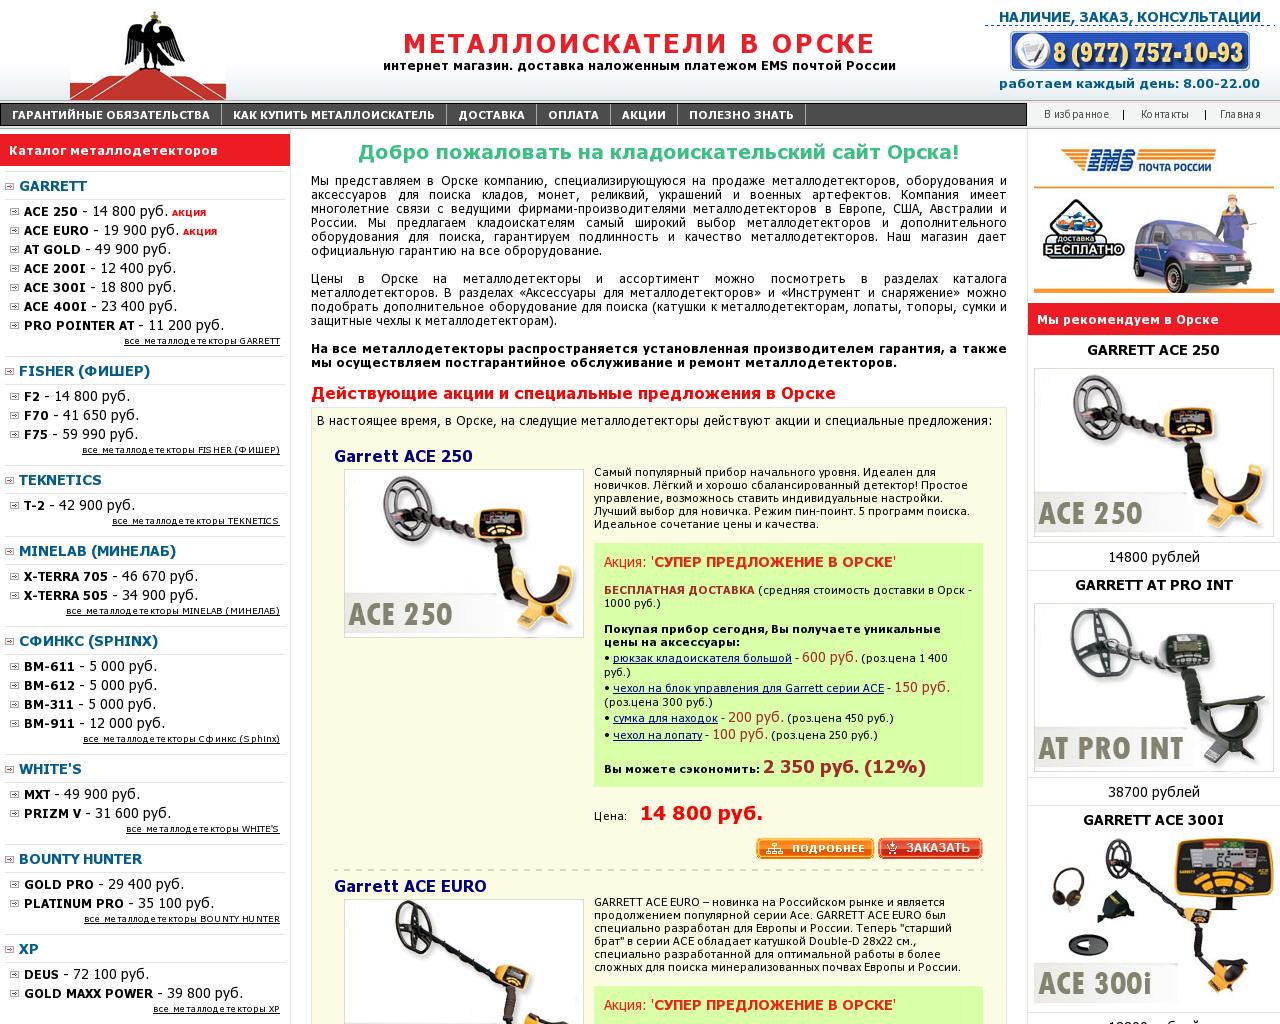 Изображение сайта металлоискатели-в-орске.рф в разрешении 1280x1024